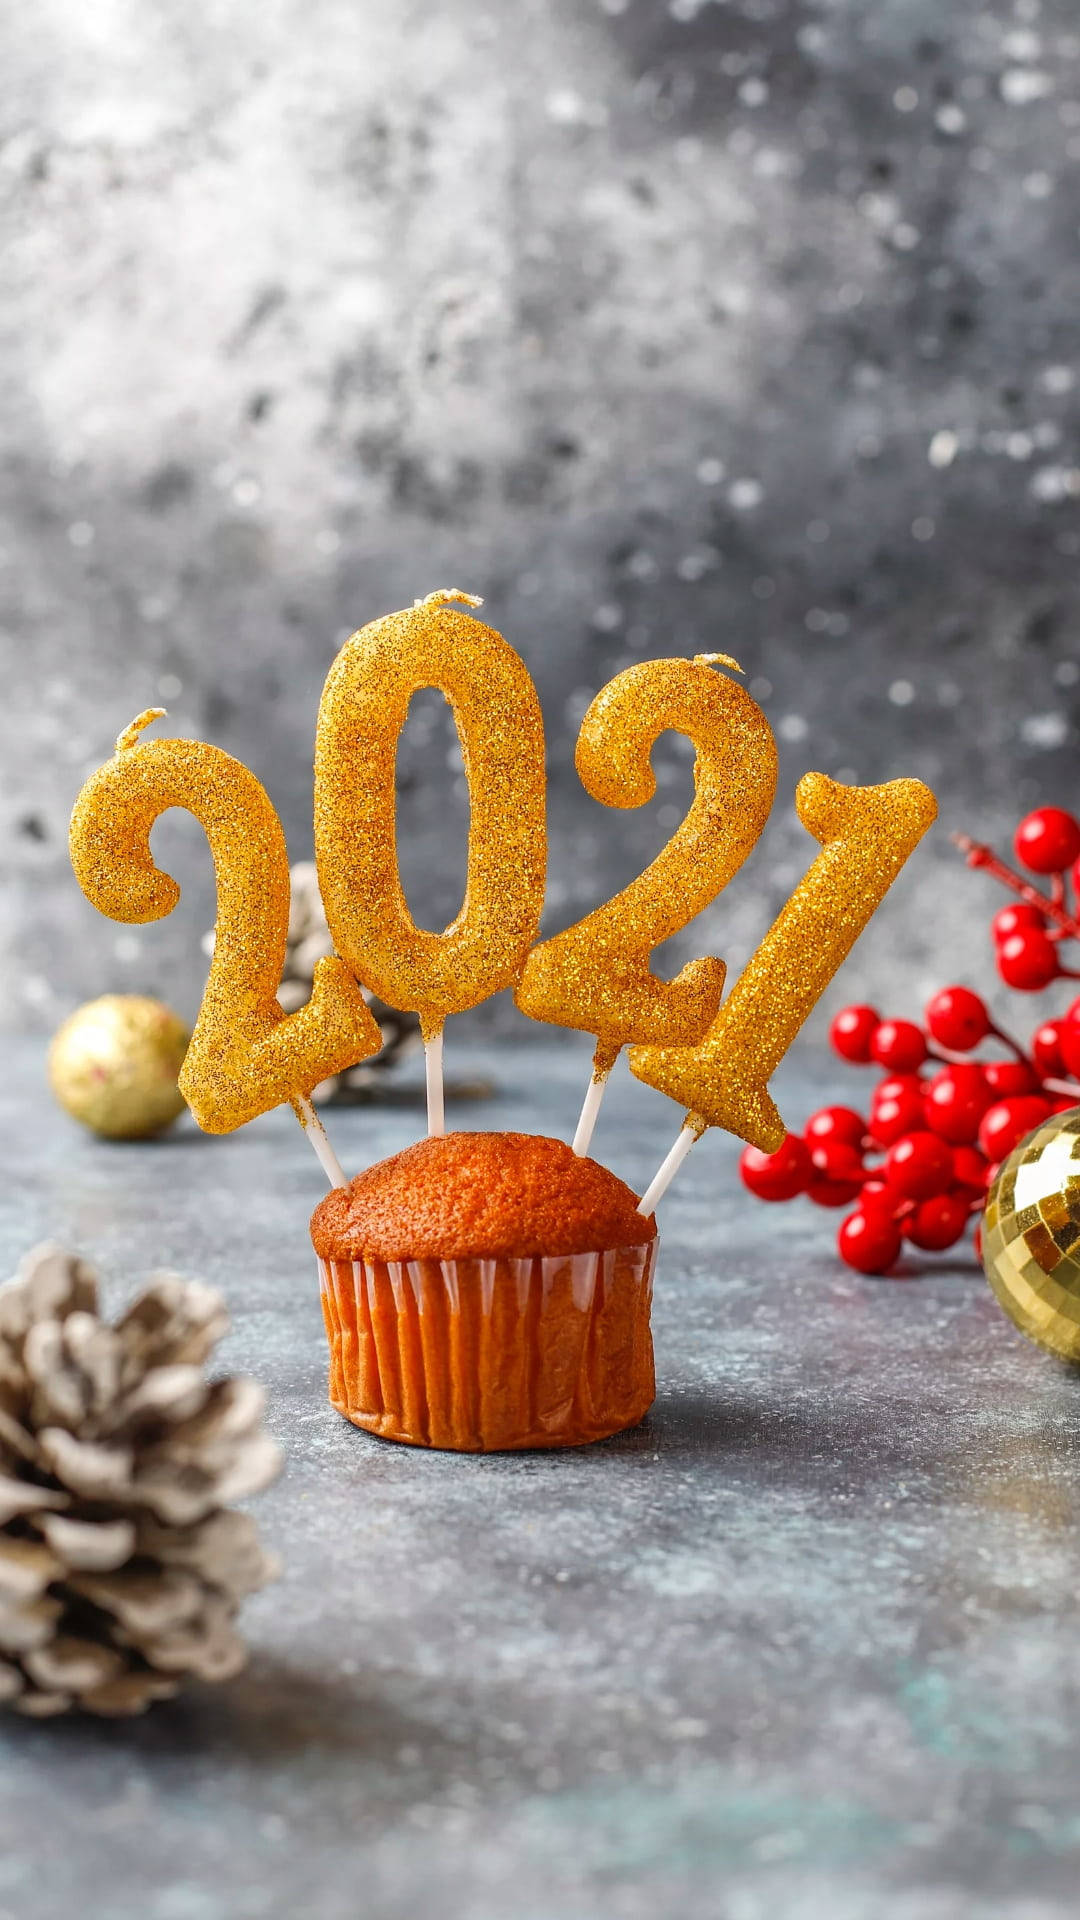 Feliceanno Nuovo 2021 Cupcake Sfondo